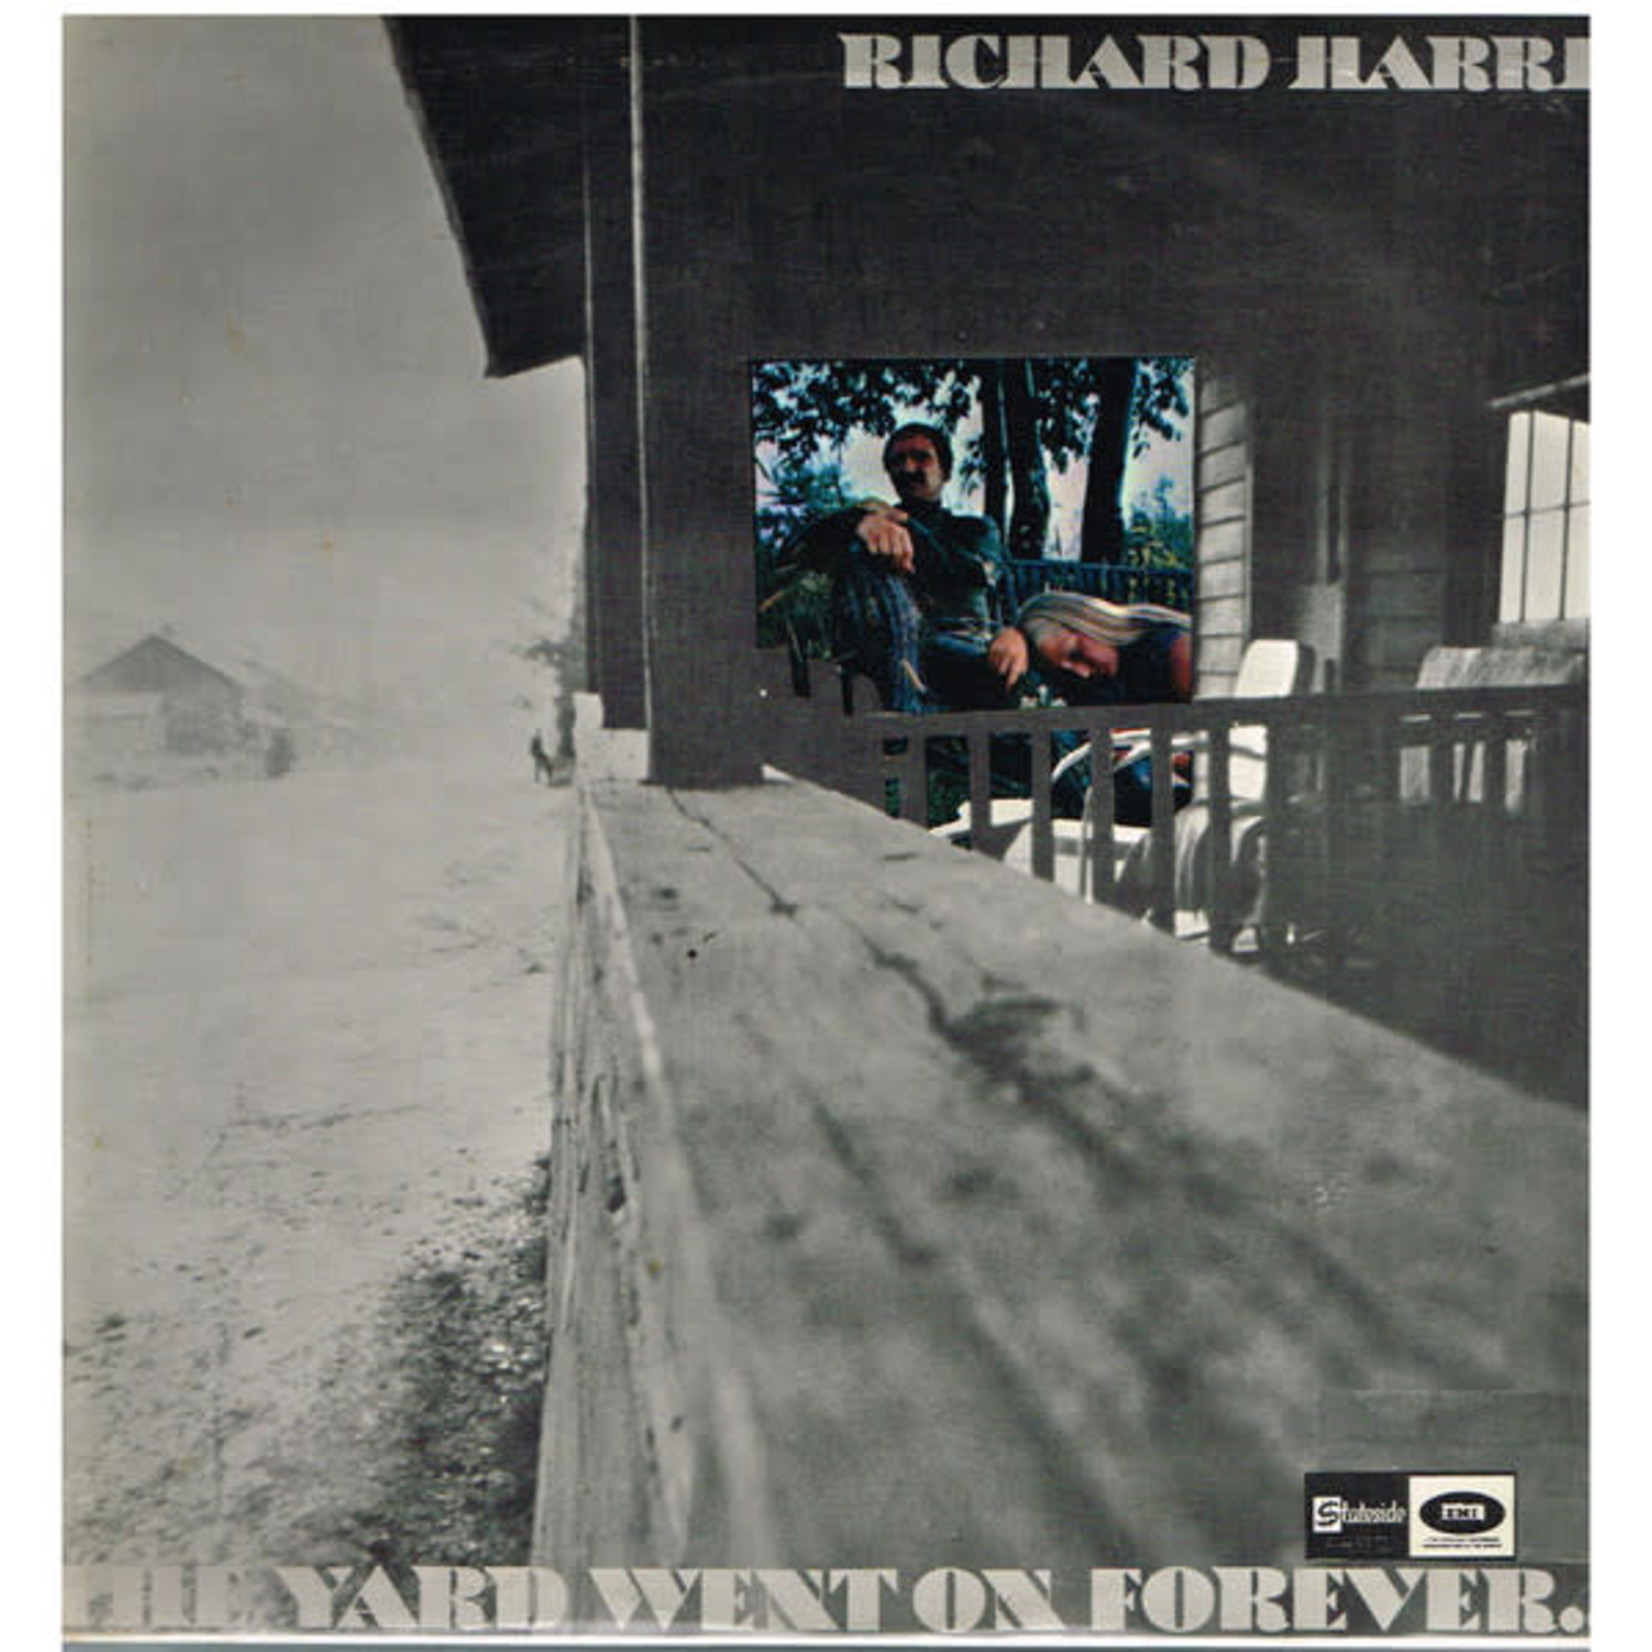 [Vintage] Richard Harris - The Yard Went on Forever